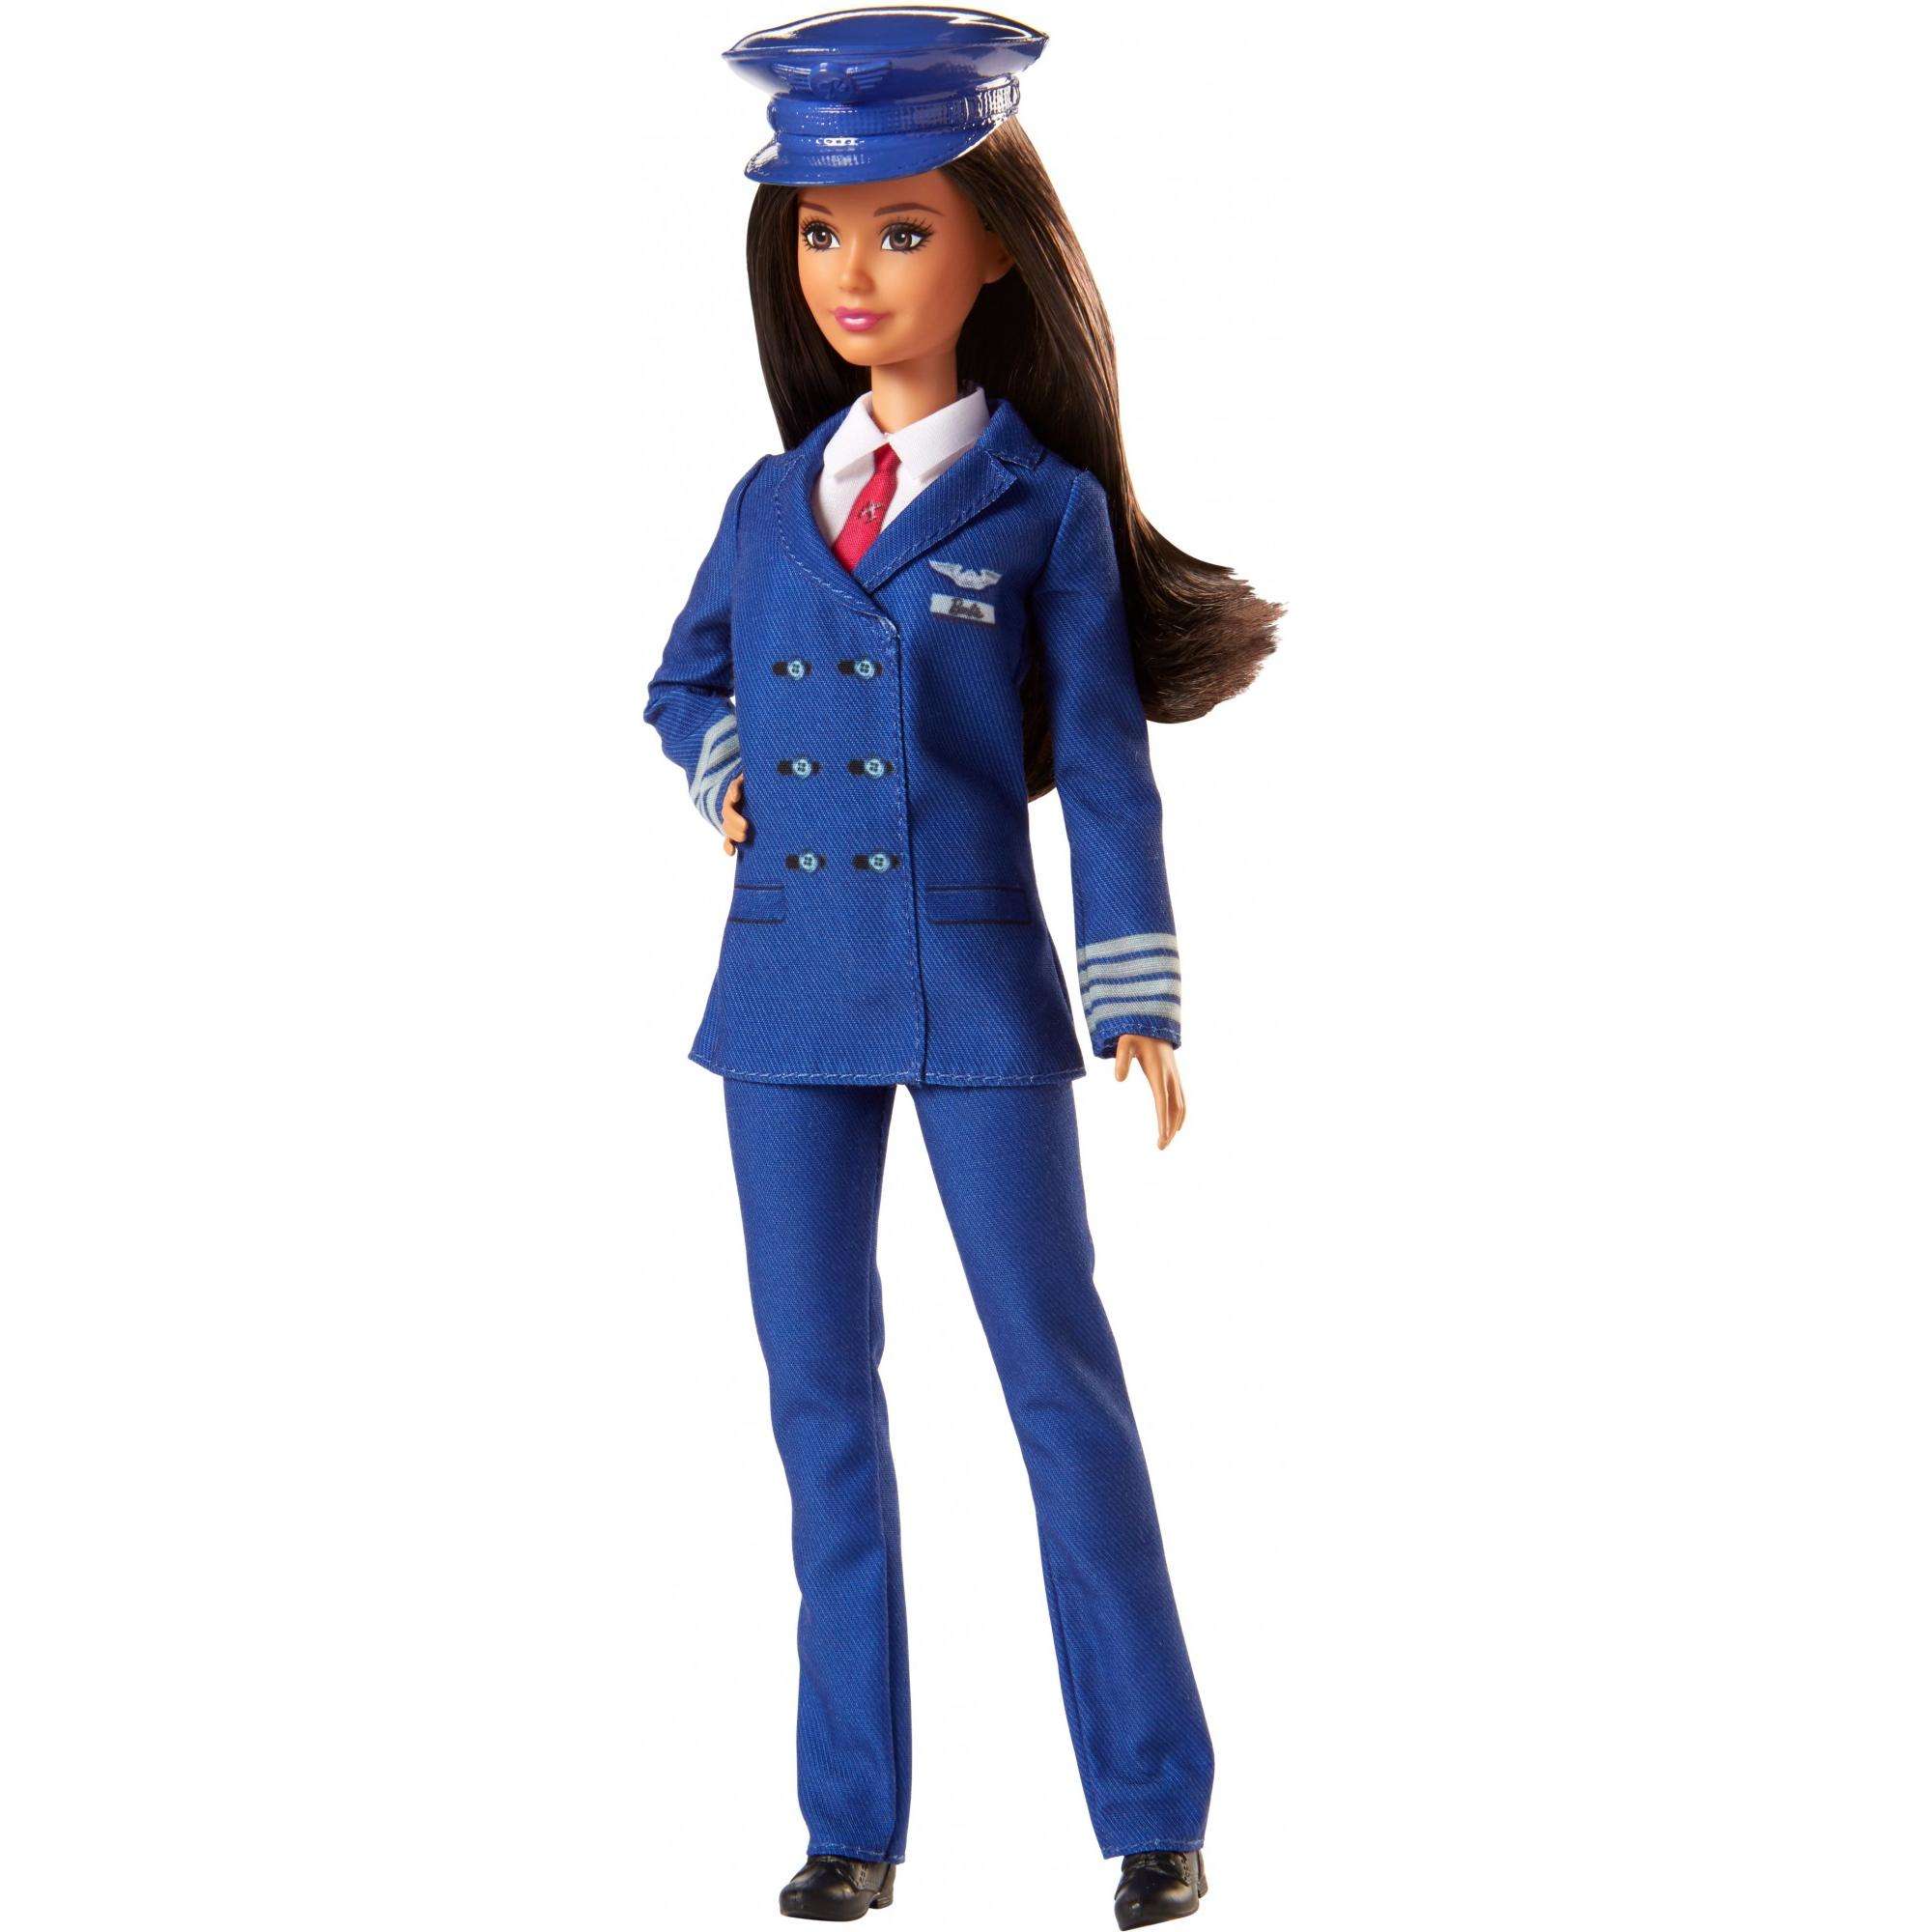 Barbie Careers Pilot Doll with Brunette Hair & Accessories - Walmart.com